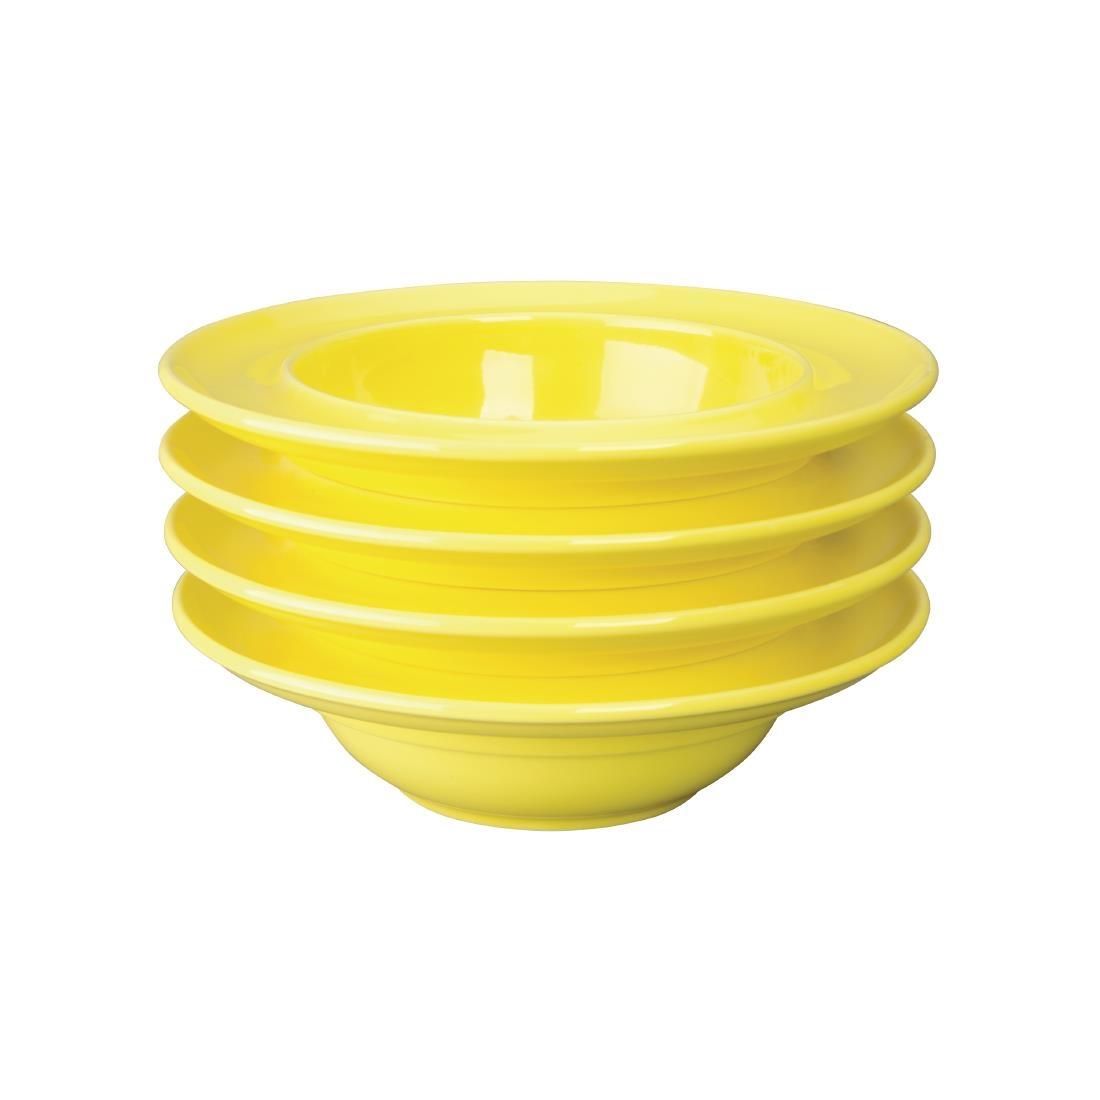 Olympia Kristallon Heritage Raised Rim Bowls Yellow 205mm (Pack of 4) - DW708  - 6